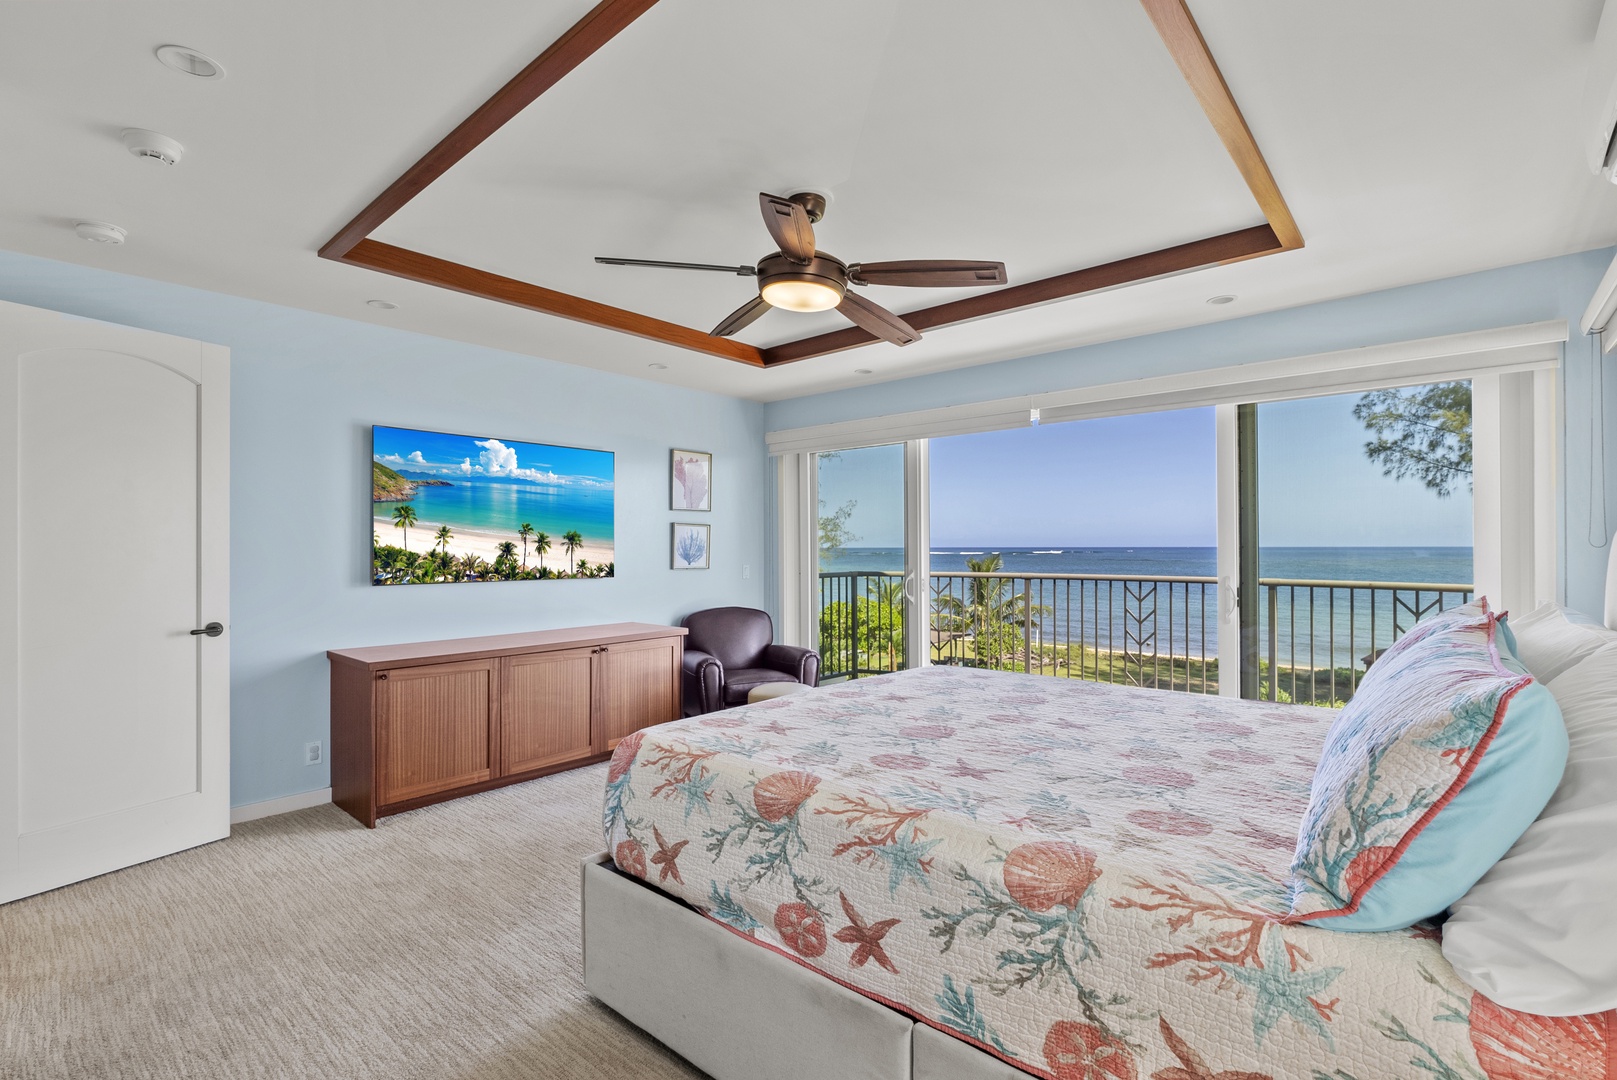 Waialua Vacation Rentals, Waialua Beachfront Getaway - Kings bed offered in Primary bedroom